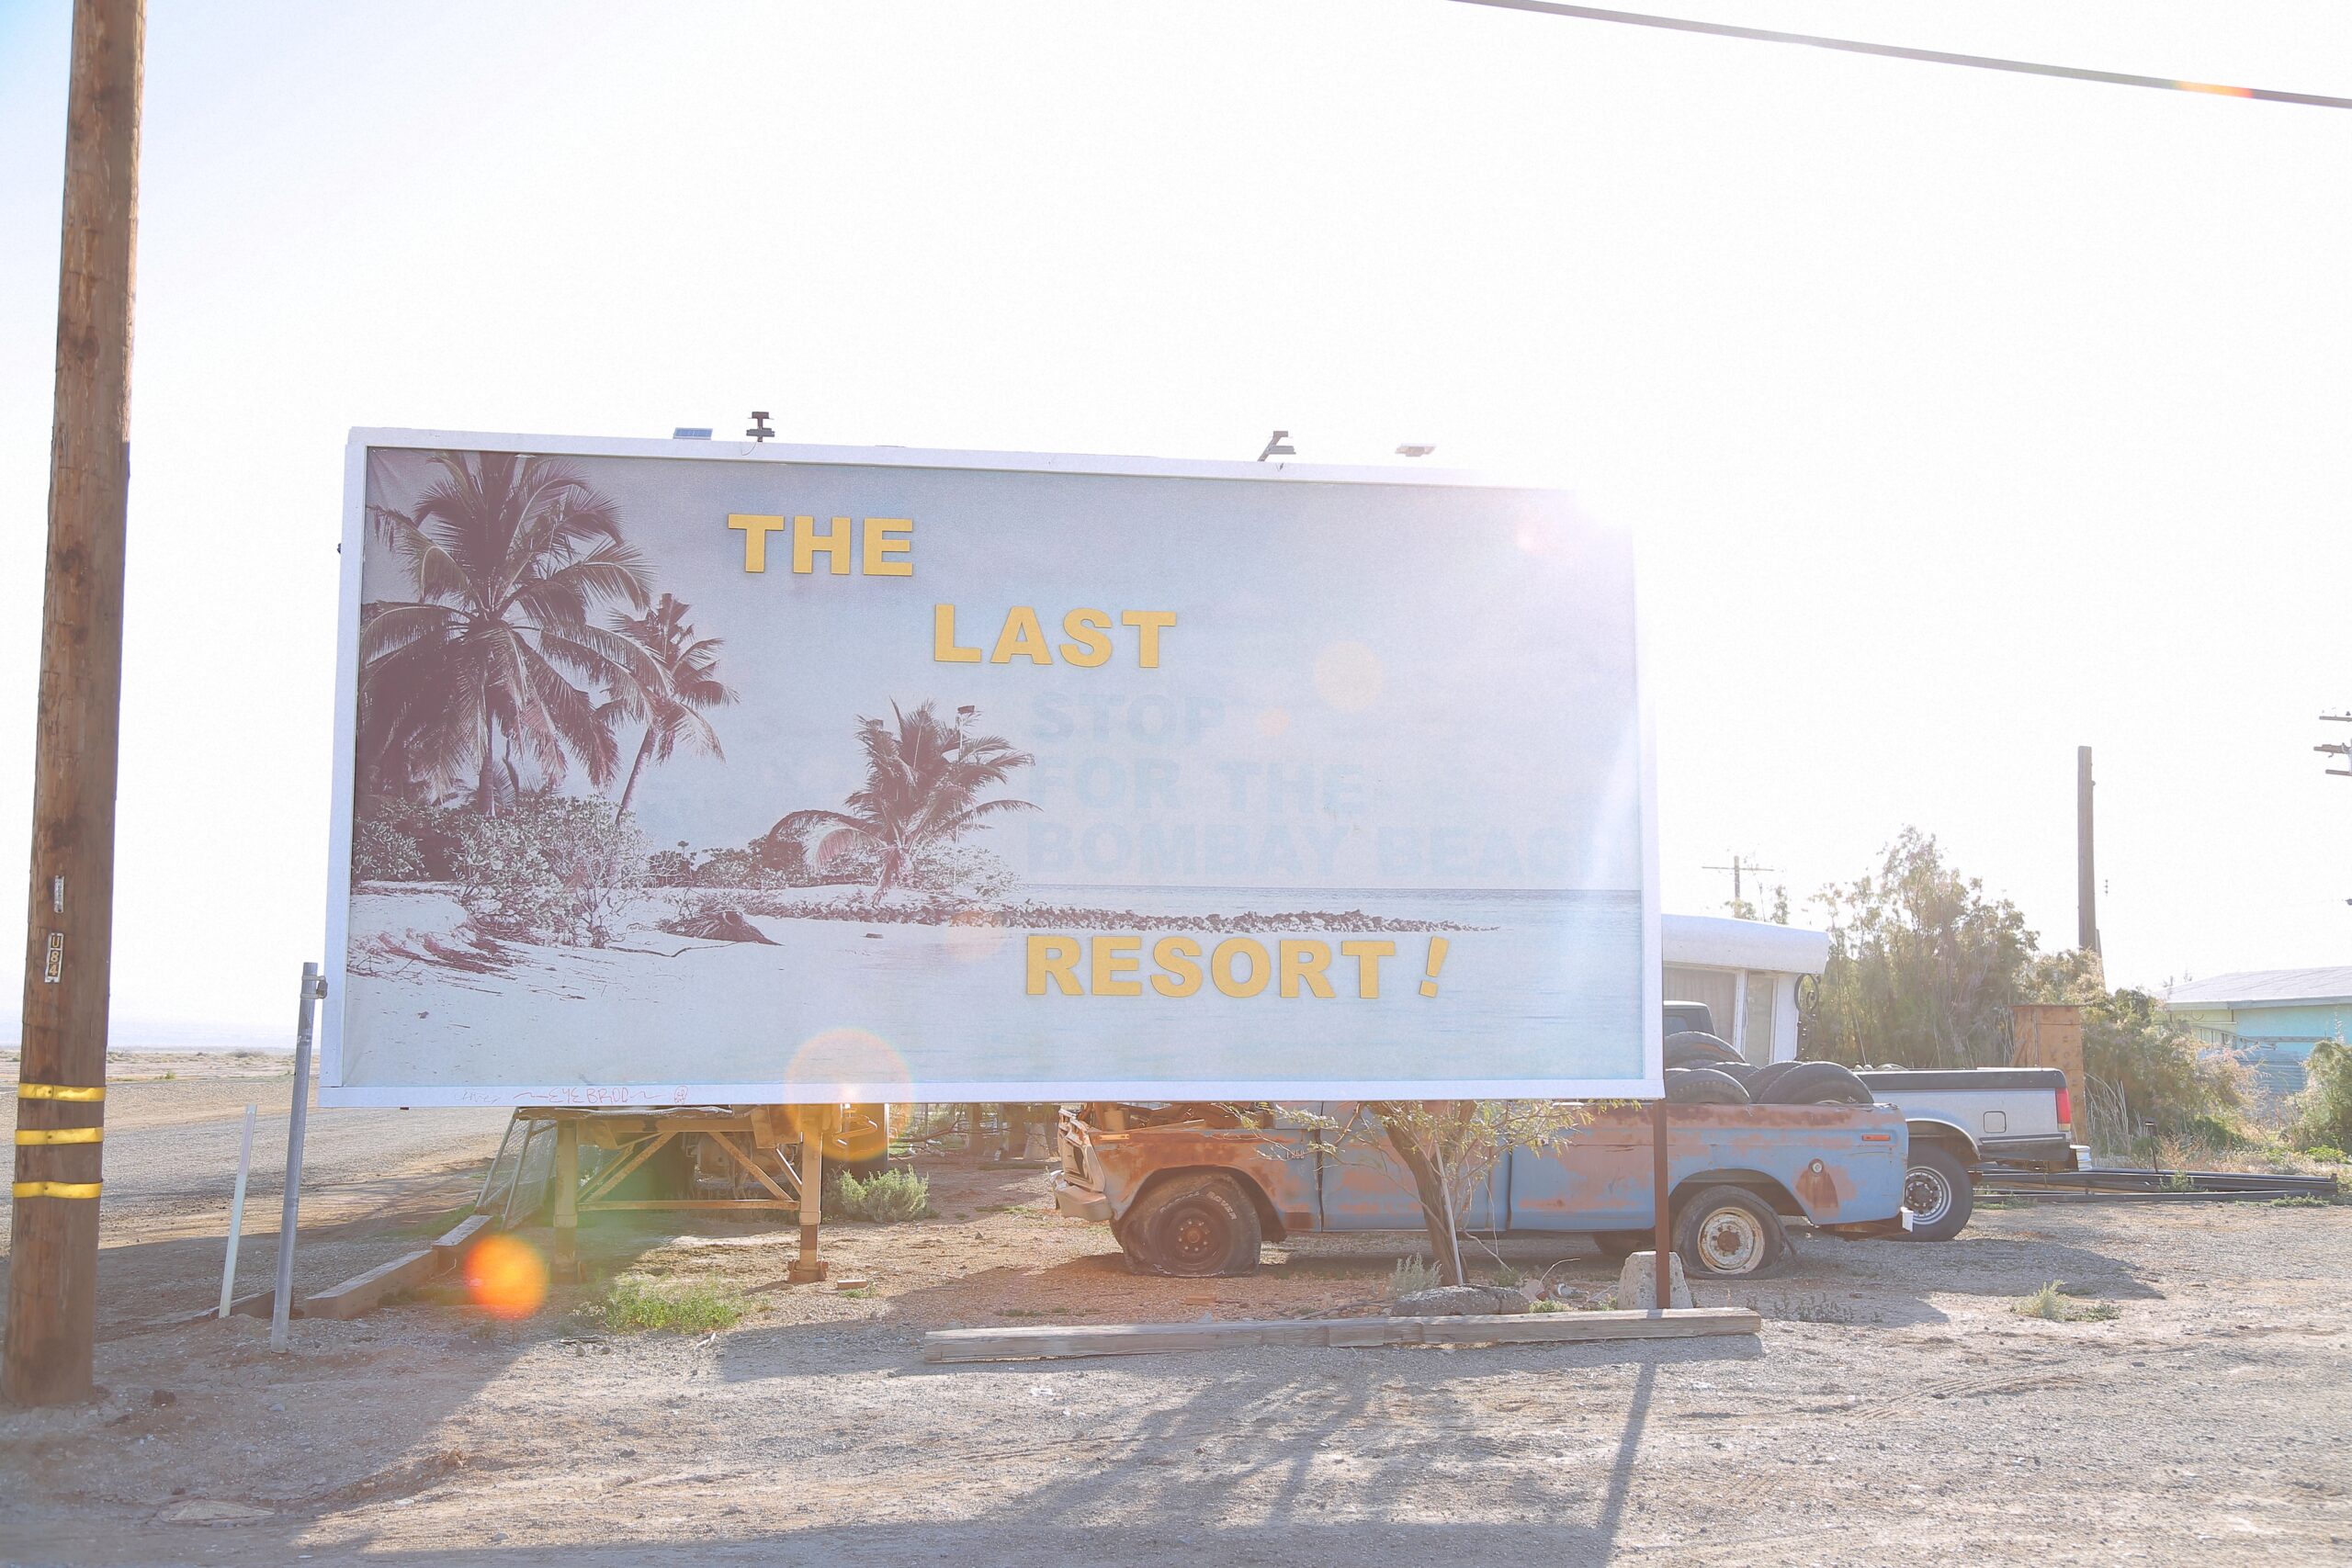 A billboard that reads 'The Last Resort!' near the Salton Sea, California.